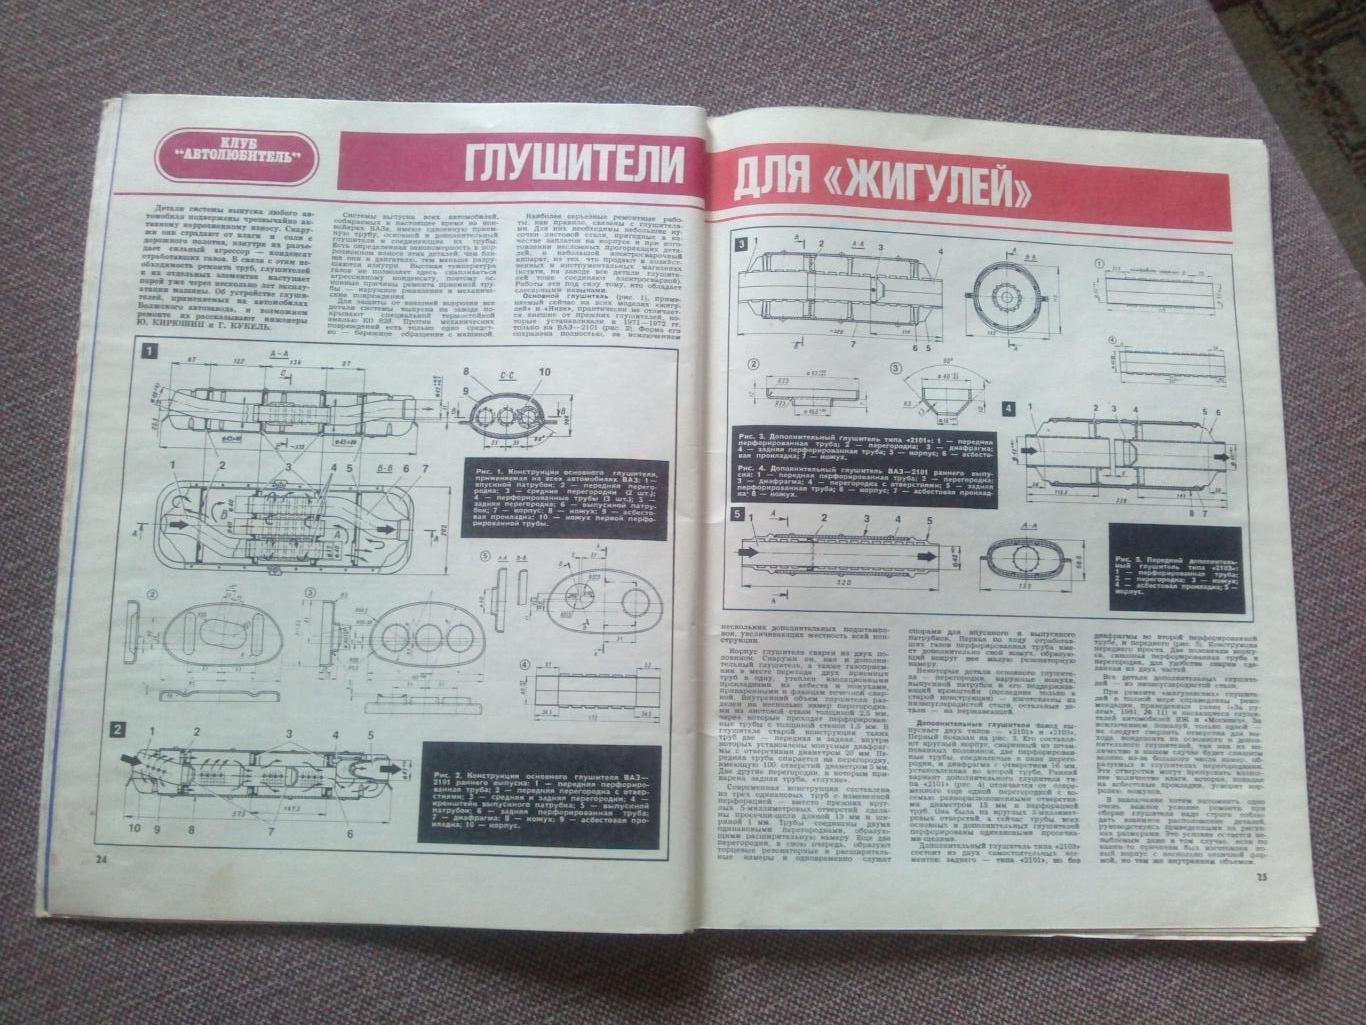 Журнал СССР :За рулем№ 8 ( август ) 1982 г. ( Автомобиль , транспорт ) 4